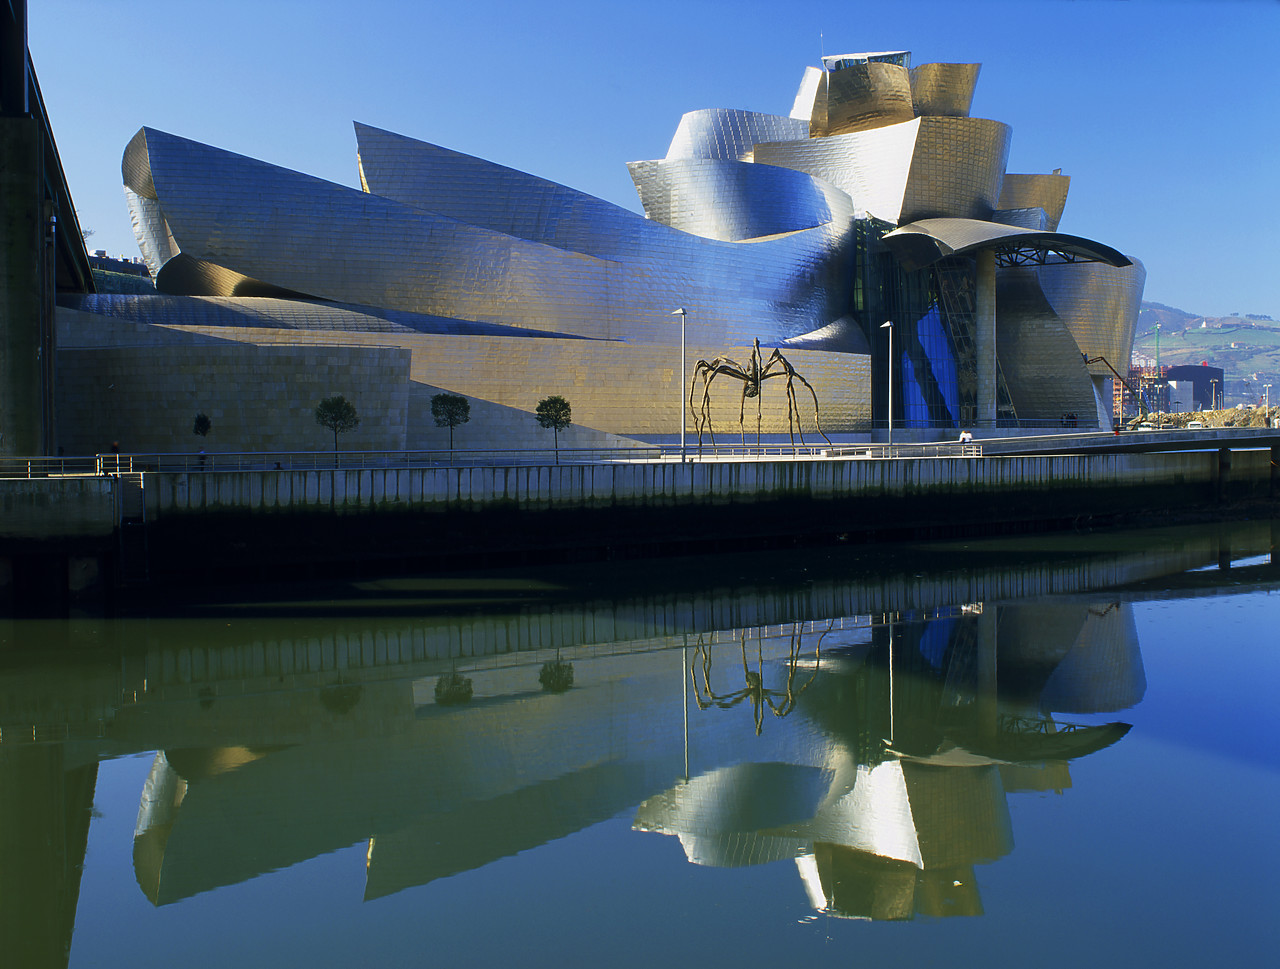 #020014-1 - The Guggenheim Museum, Bilbao, Basque Region, Spain